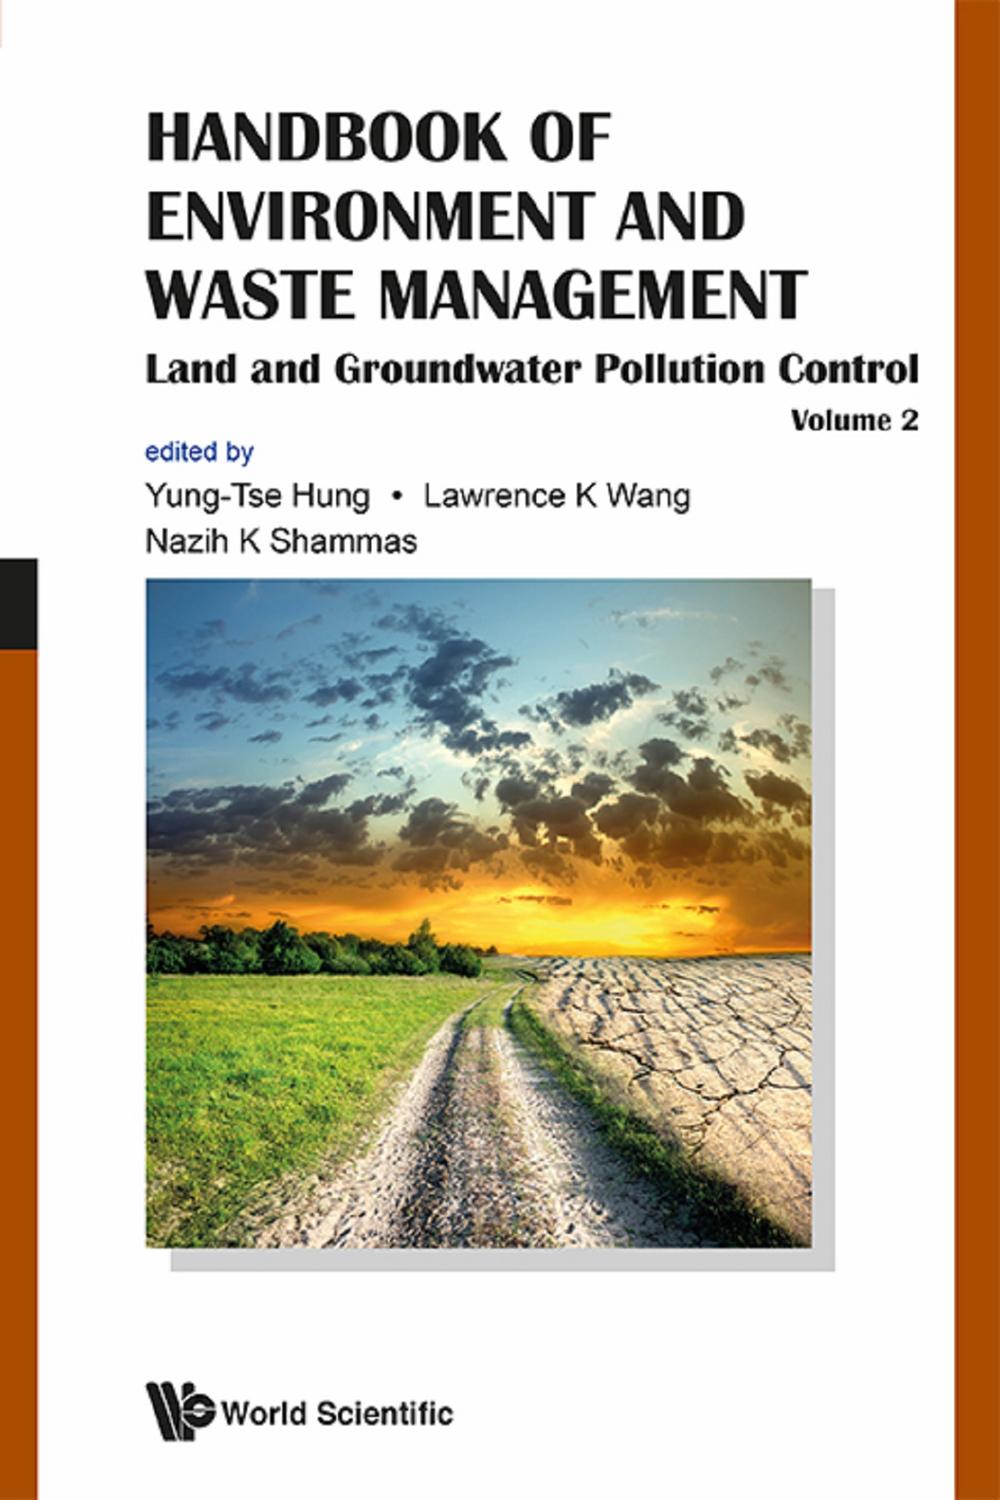 Handbook Of Environment And Waste Management - Volume 2: Land And Groundwater Pollution Control - Yung-Tse Hung, Lawrence K Wang, Nazih K Shammas